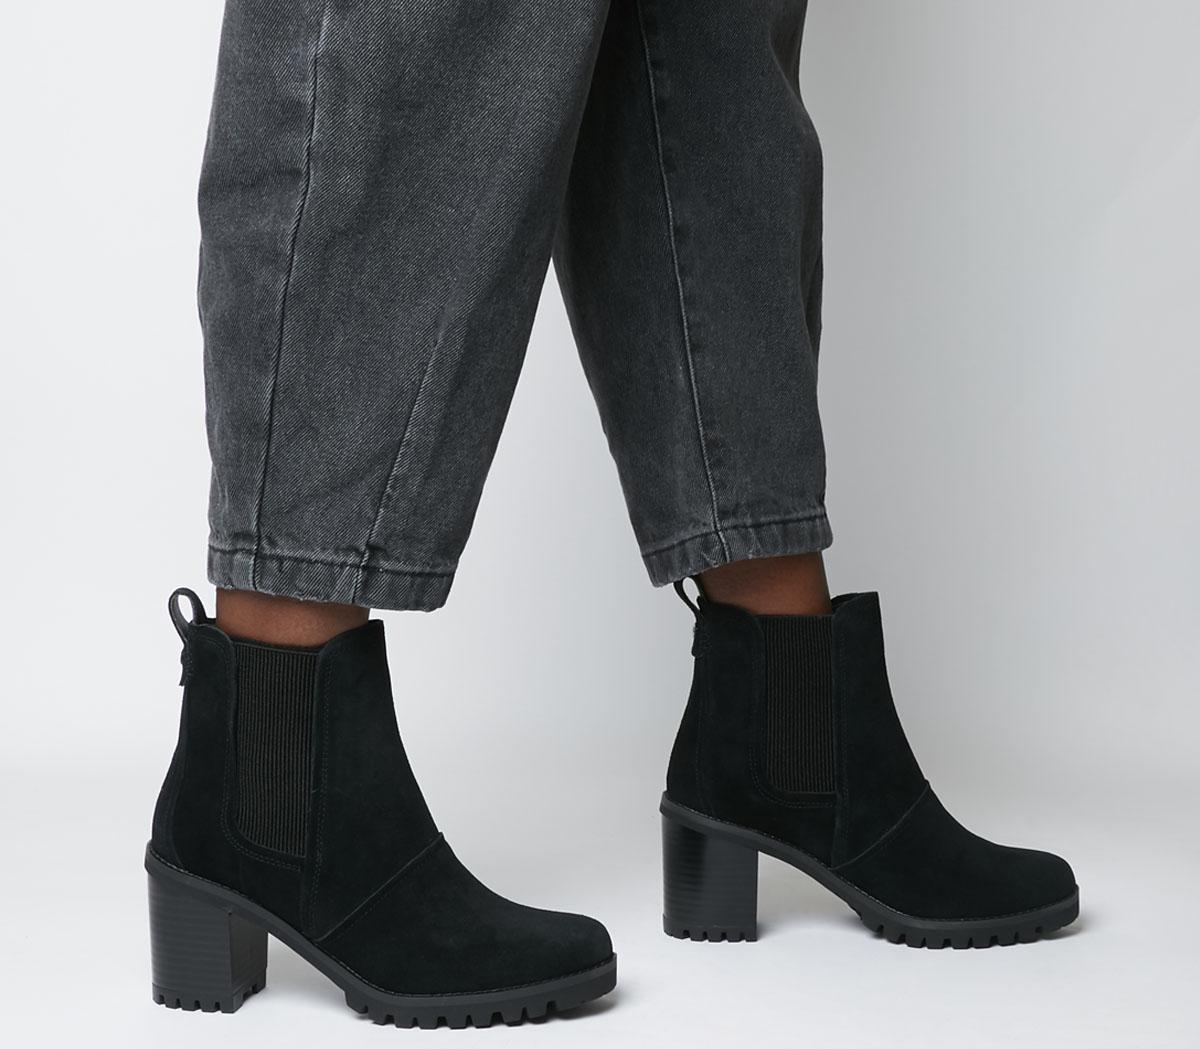 ugg black heel boots Cheaper Than 